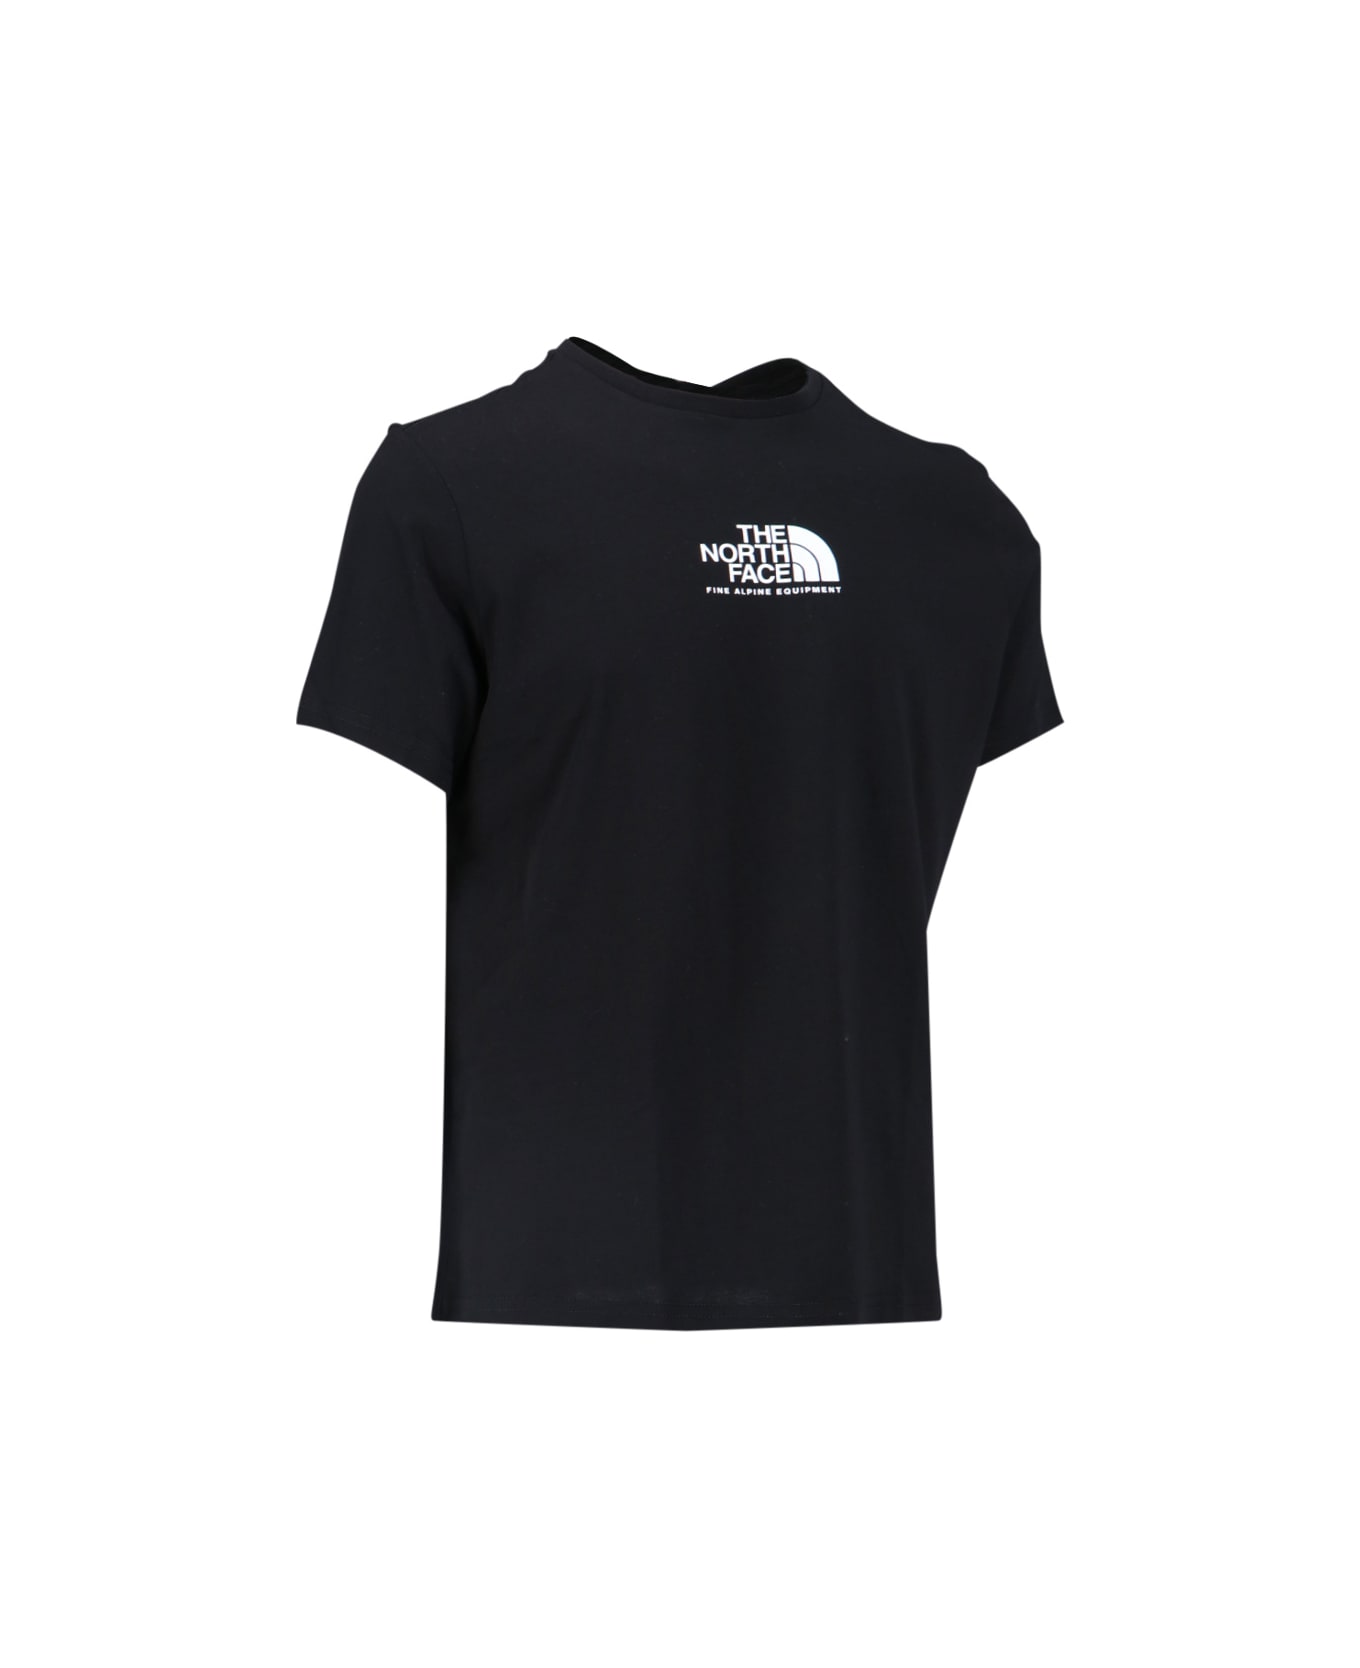 The North Face 'fine Alpine Equipment' T-shirt - Black   シャツ